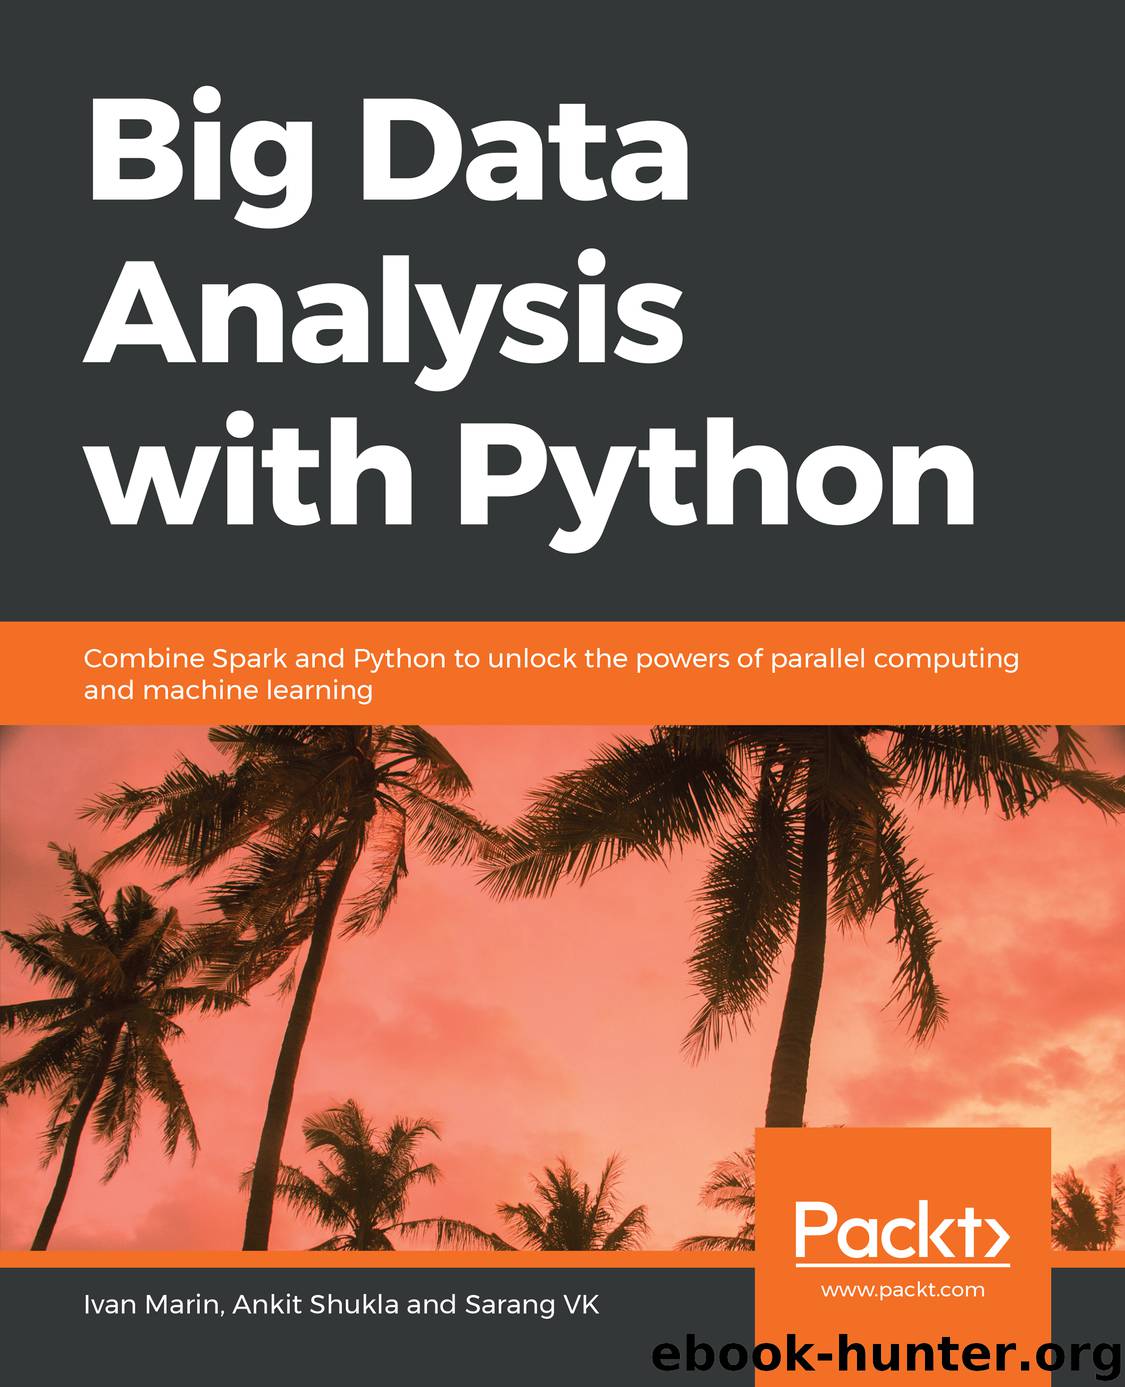 Big Data Analysis with Python by Ivan Marin